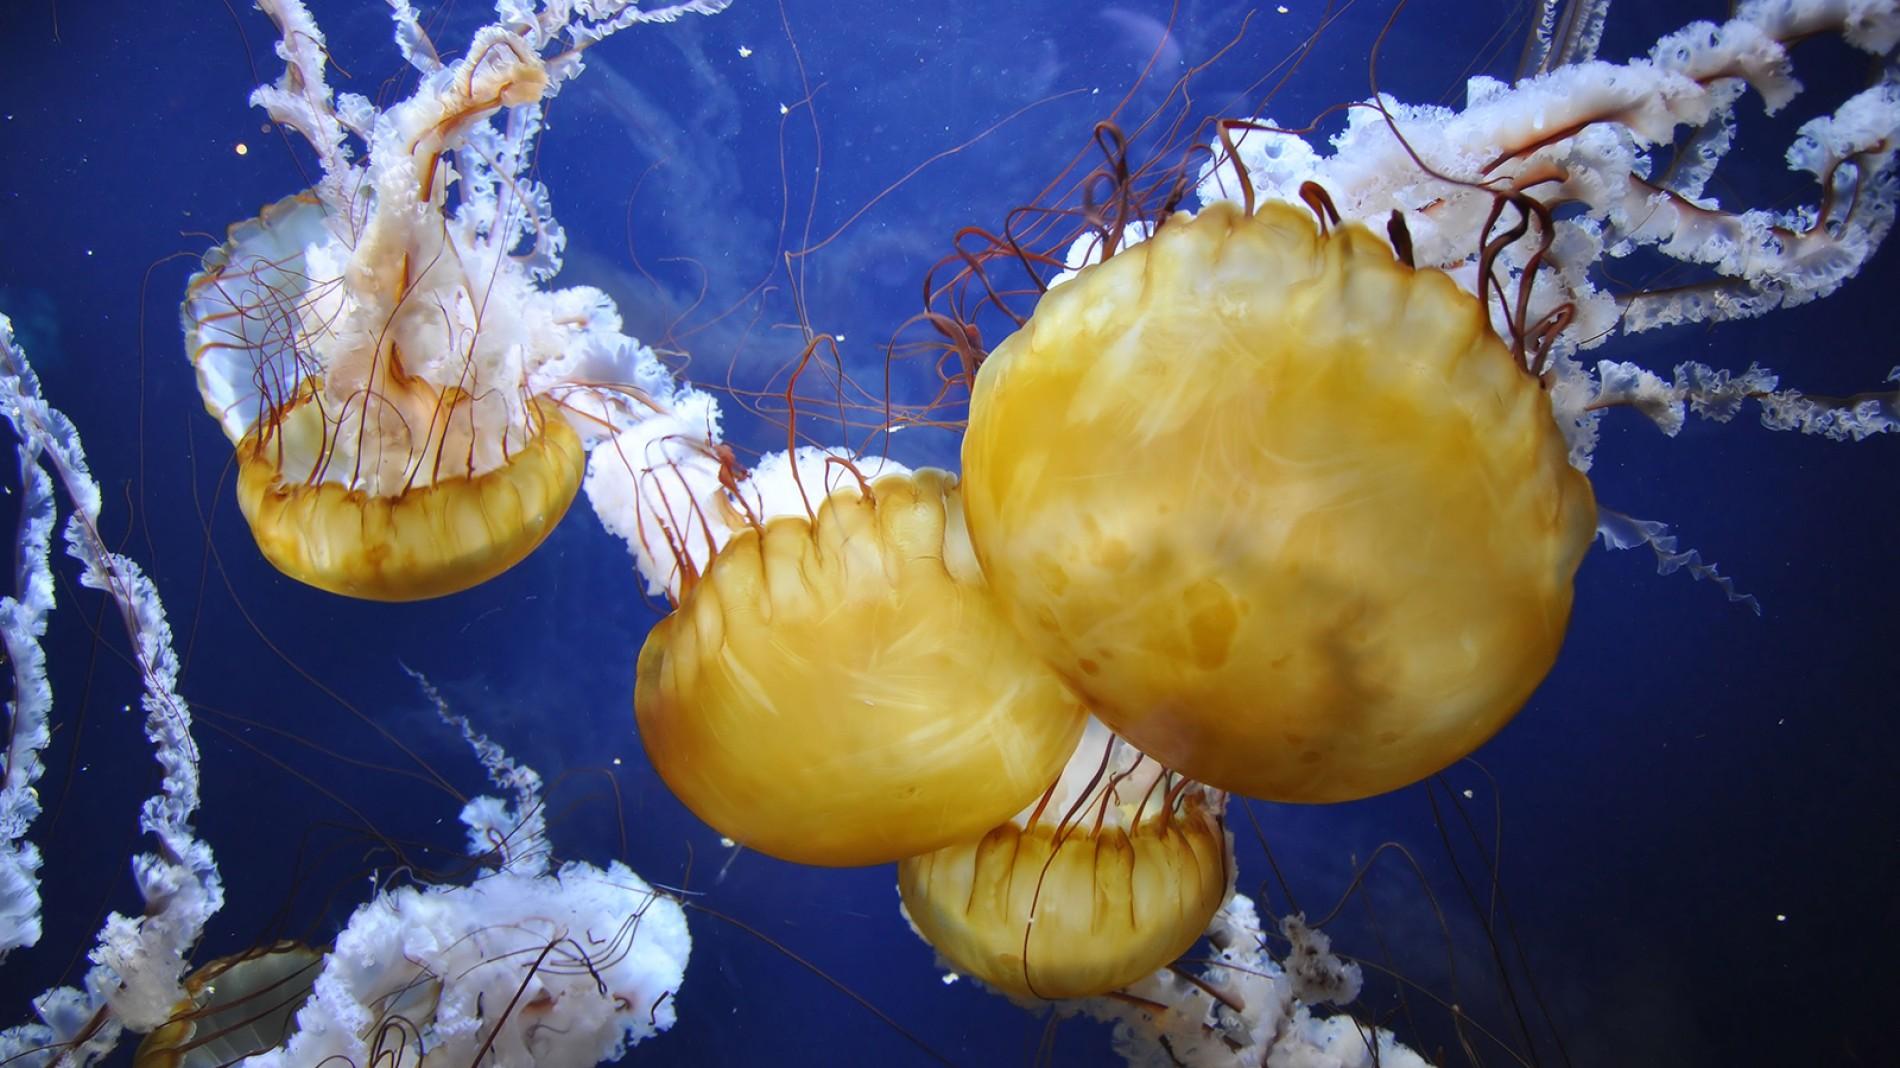 jellyfish-yellow.ngsversion.1463752708878.adapt.1900.1.jpg